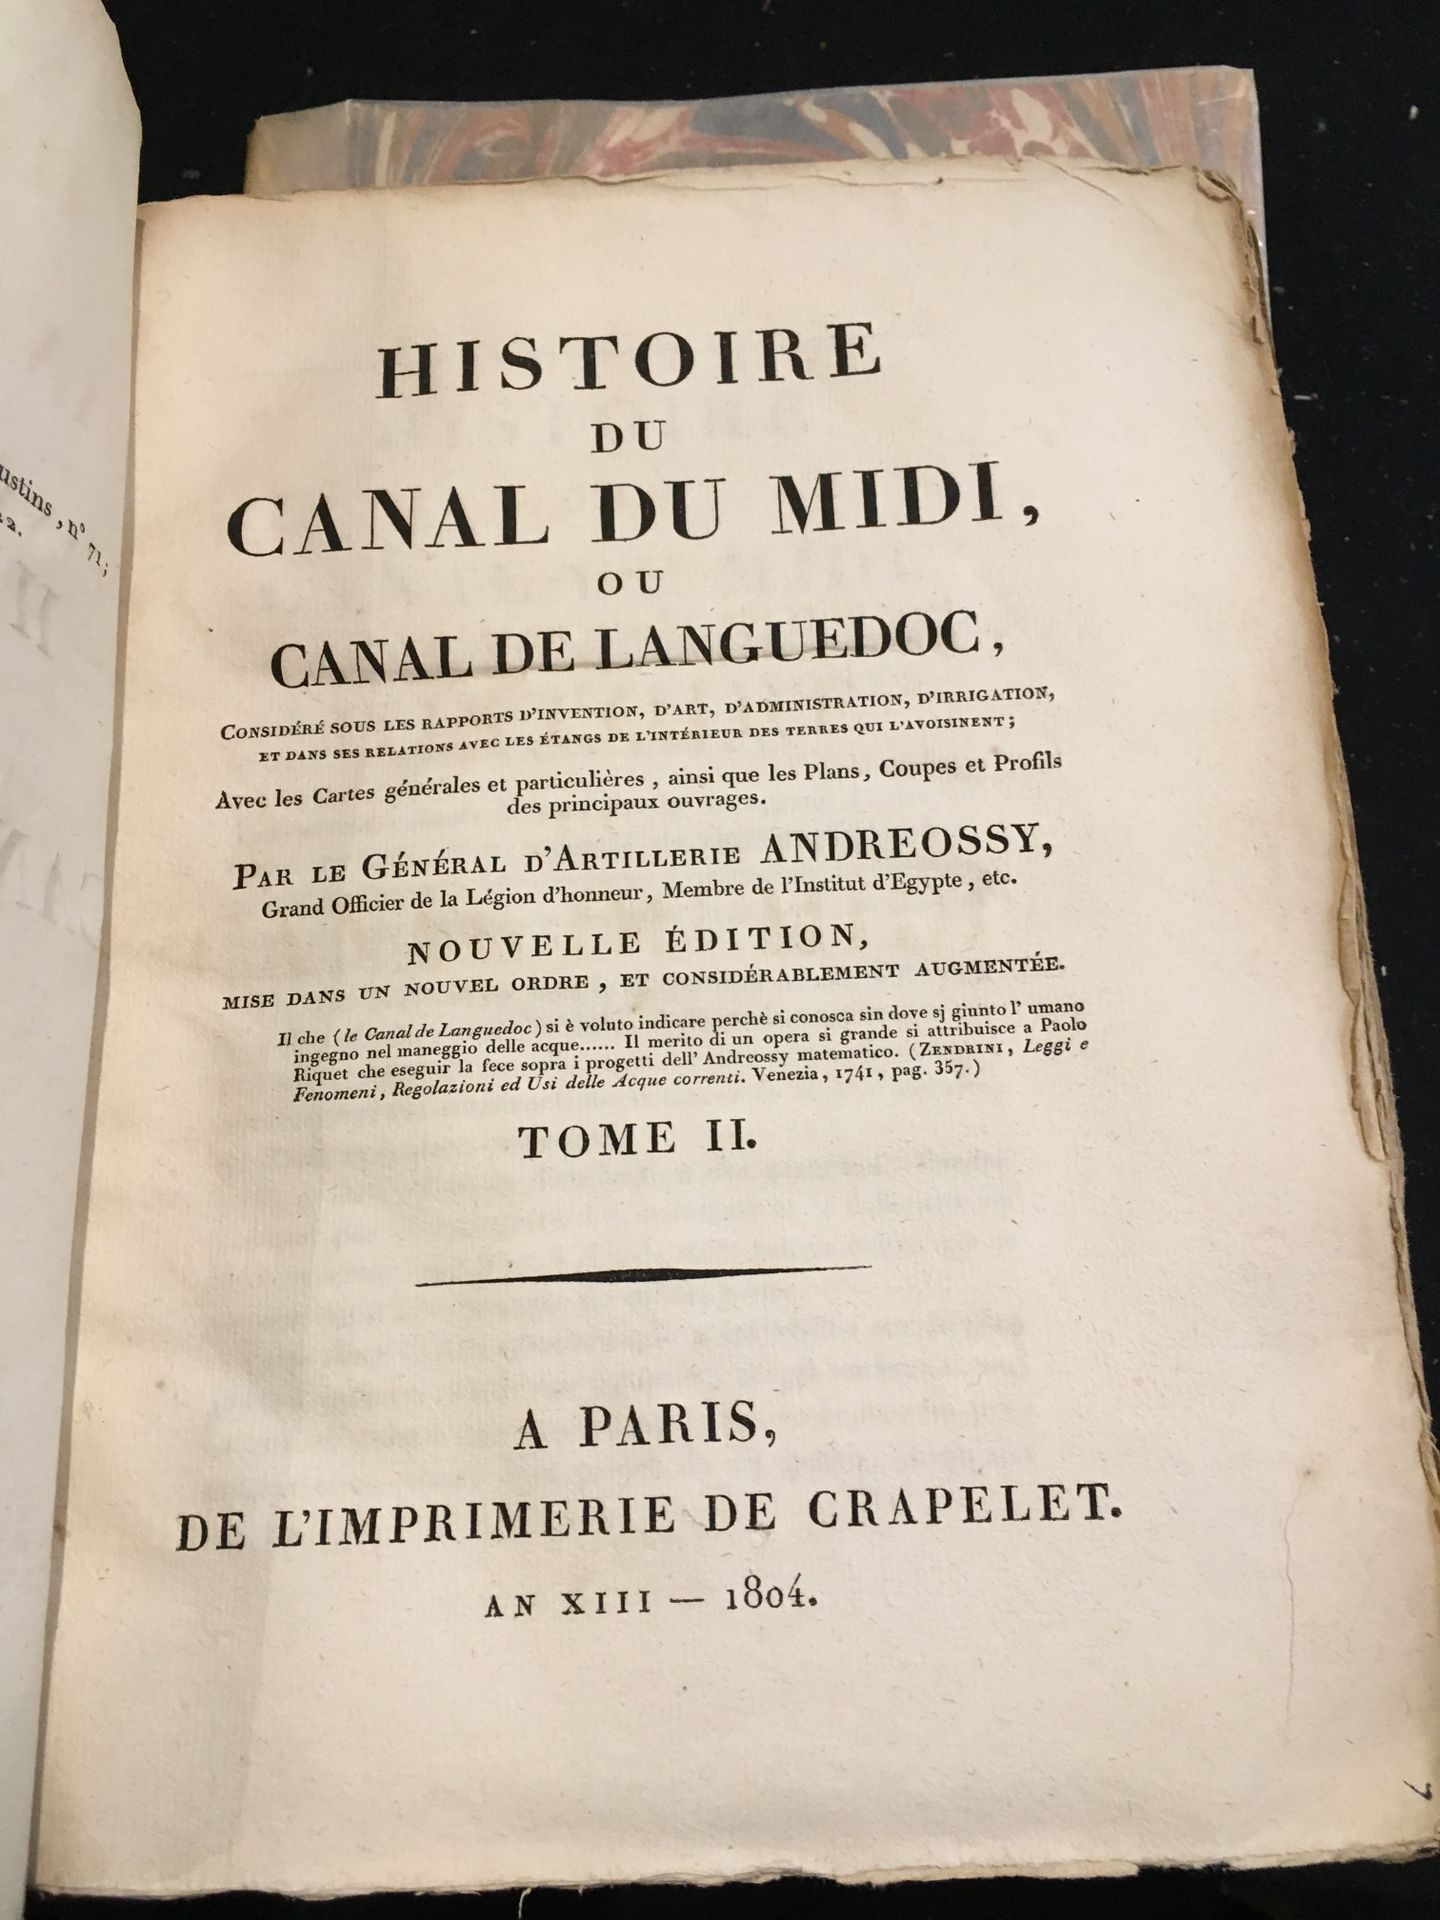 Null languedoc（canal de）]。ANDRÉOSSY（Antoine François将军）。
米迪运河或朗格多克运河的历史，从发明、艺术、管&hellip;